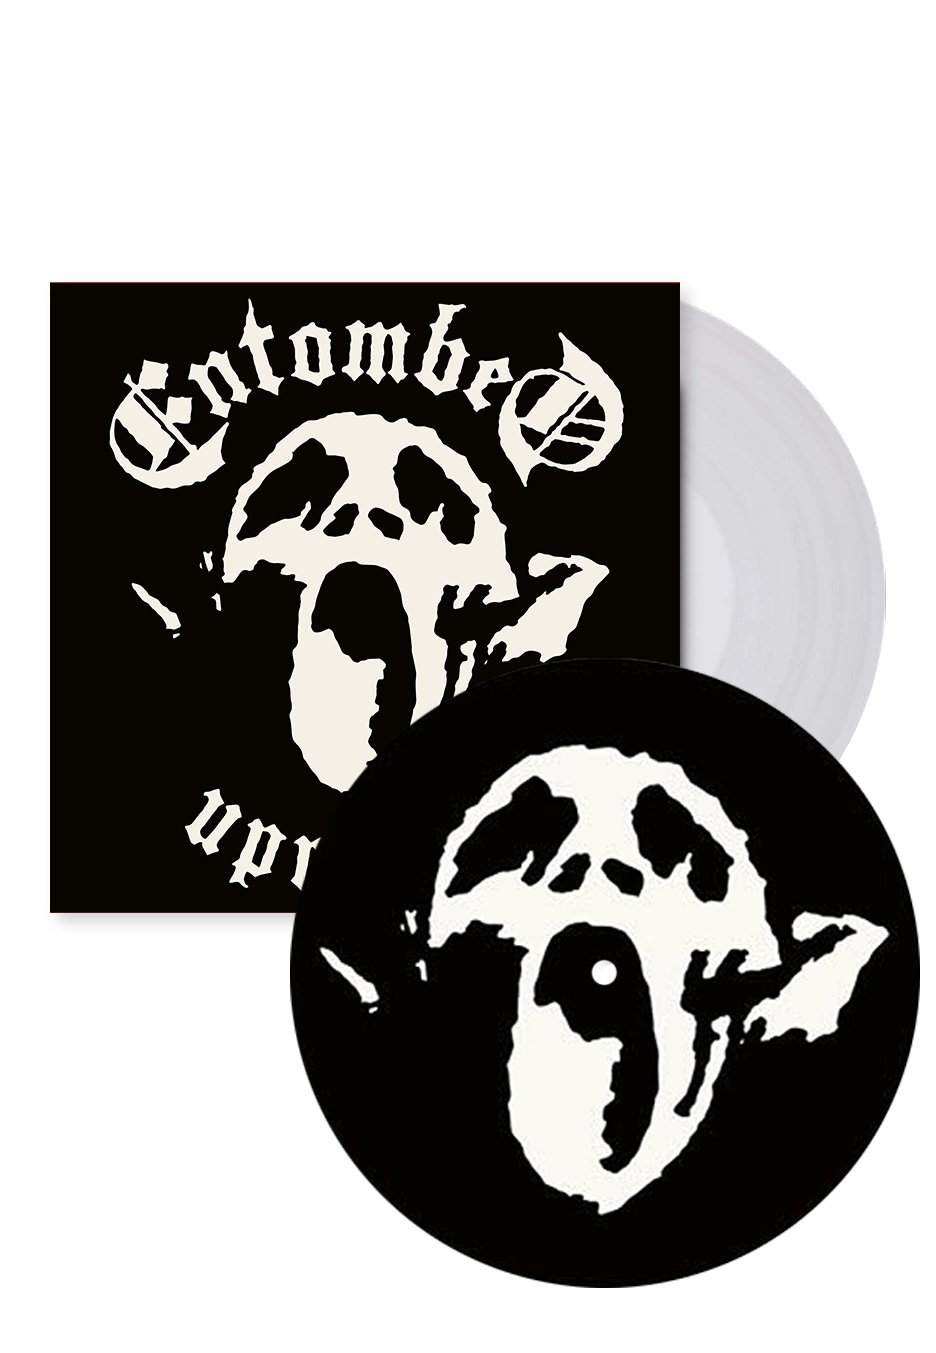 Entombed - Uprising (Remastered) Ltd. Clear - Colored Vinyl + Slipmat